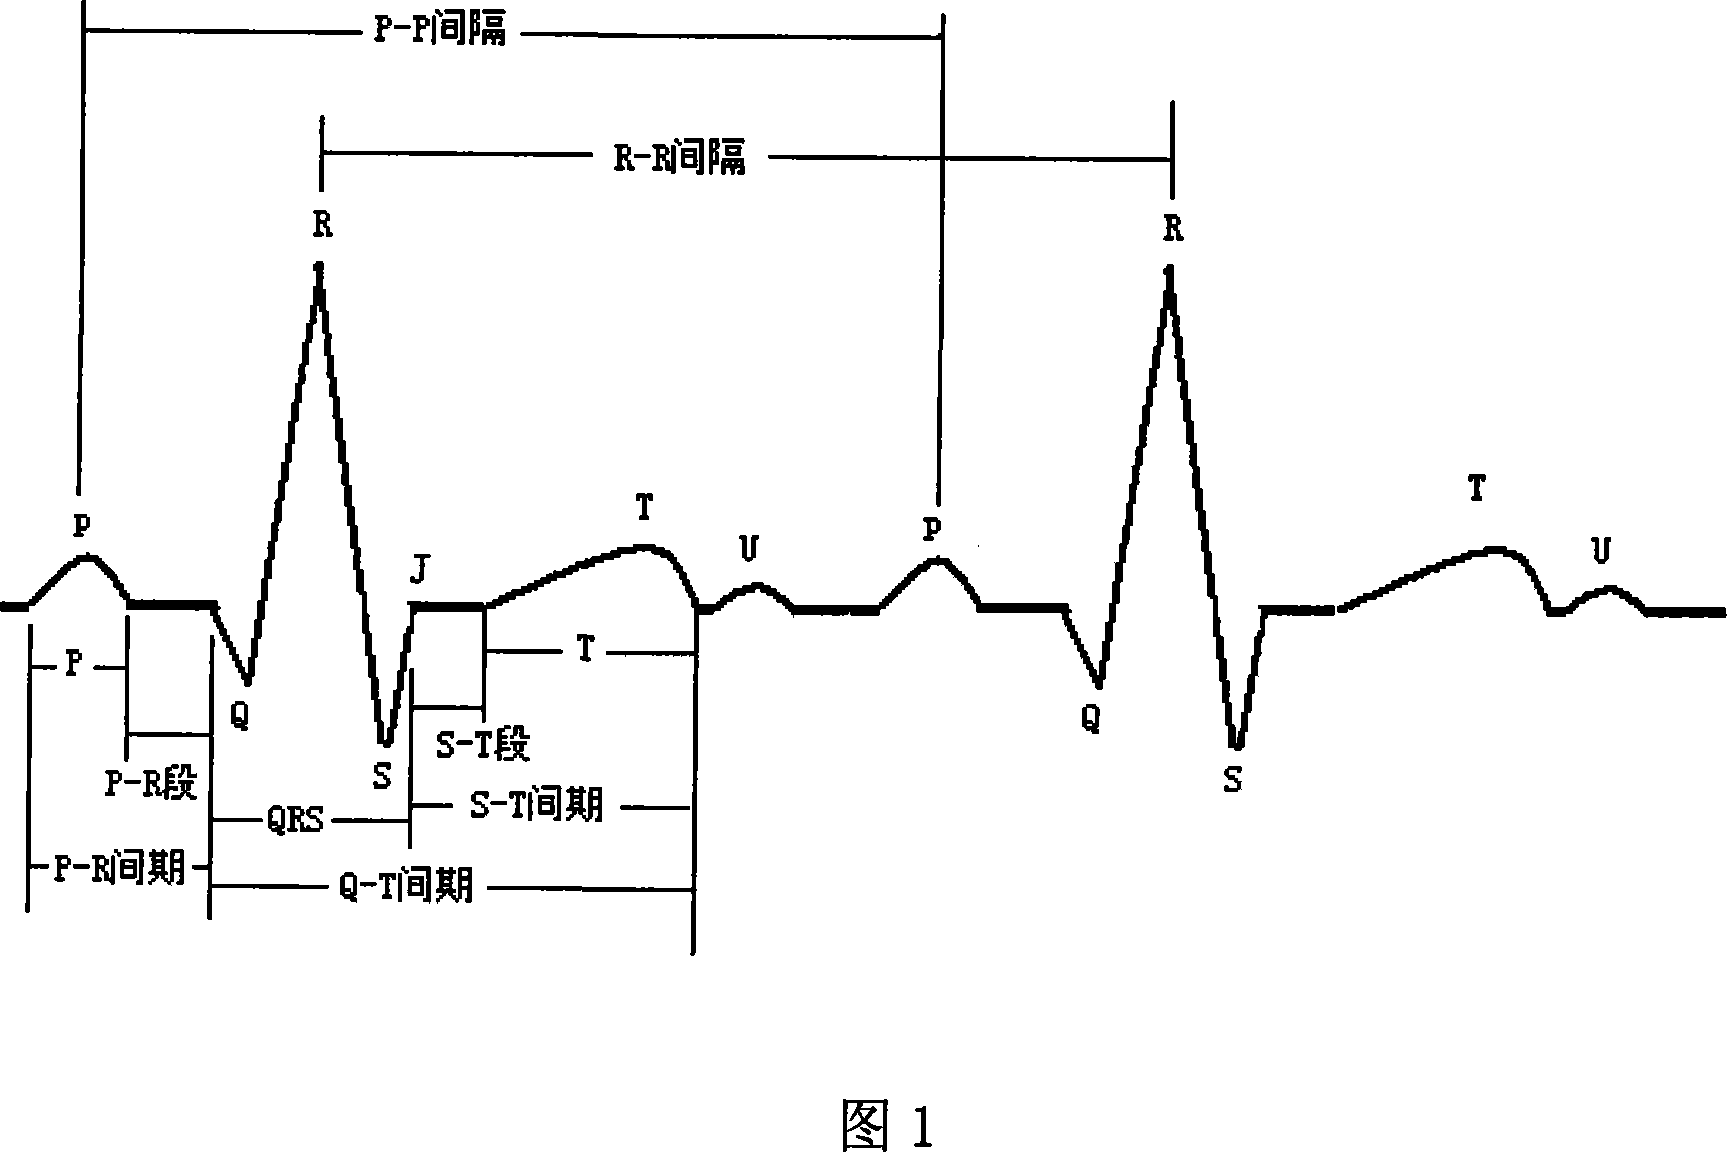 Method for measuring electrocardiogram